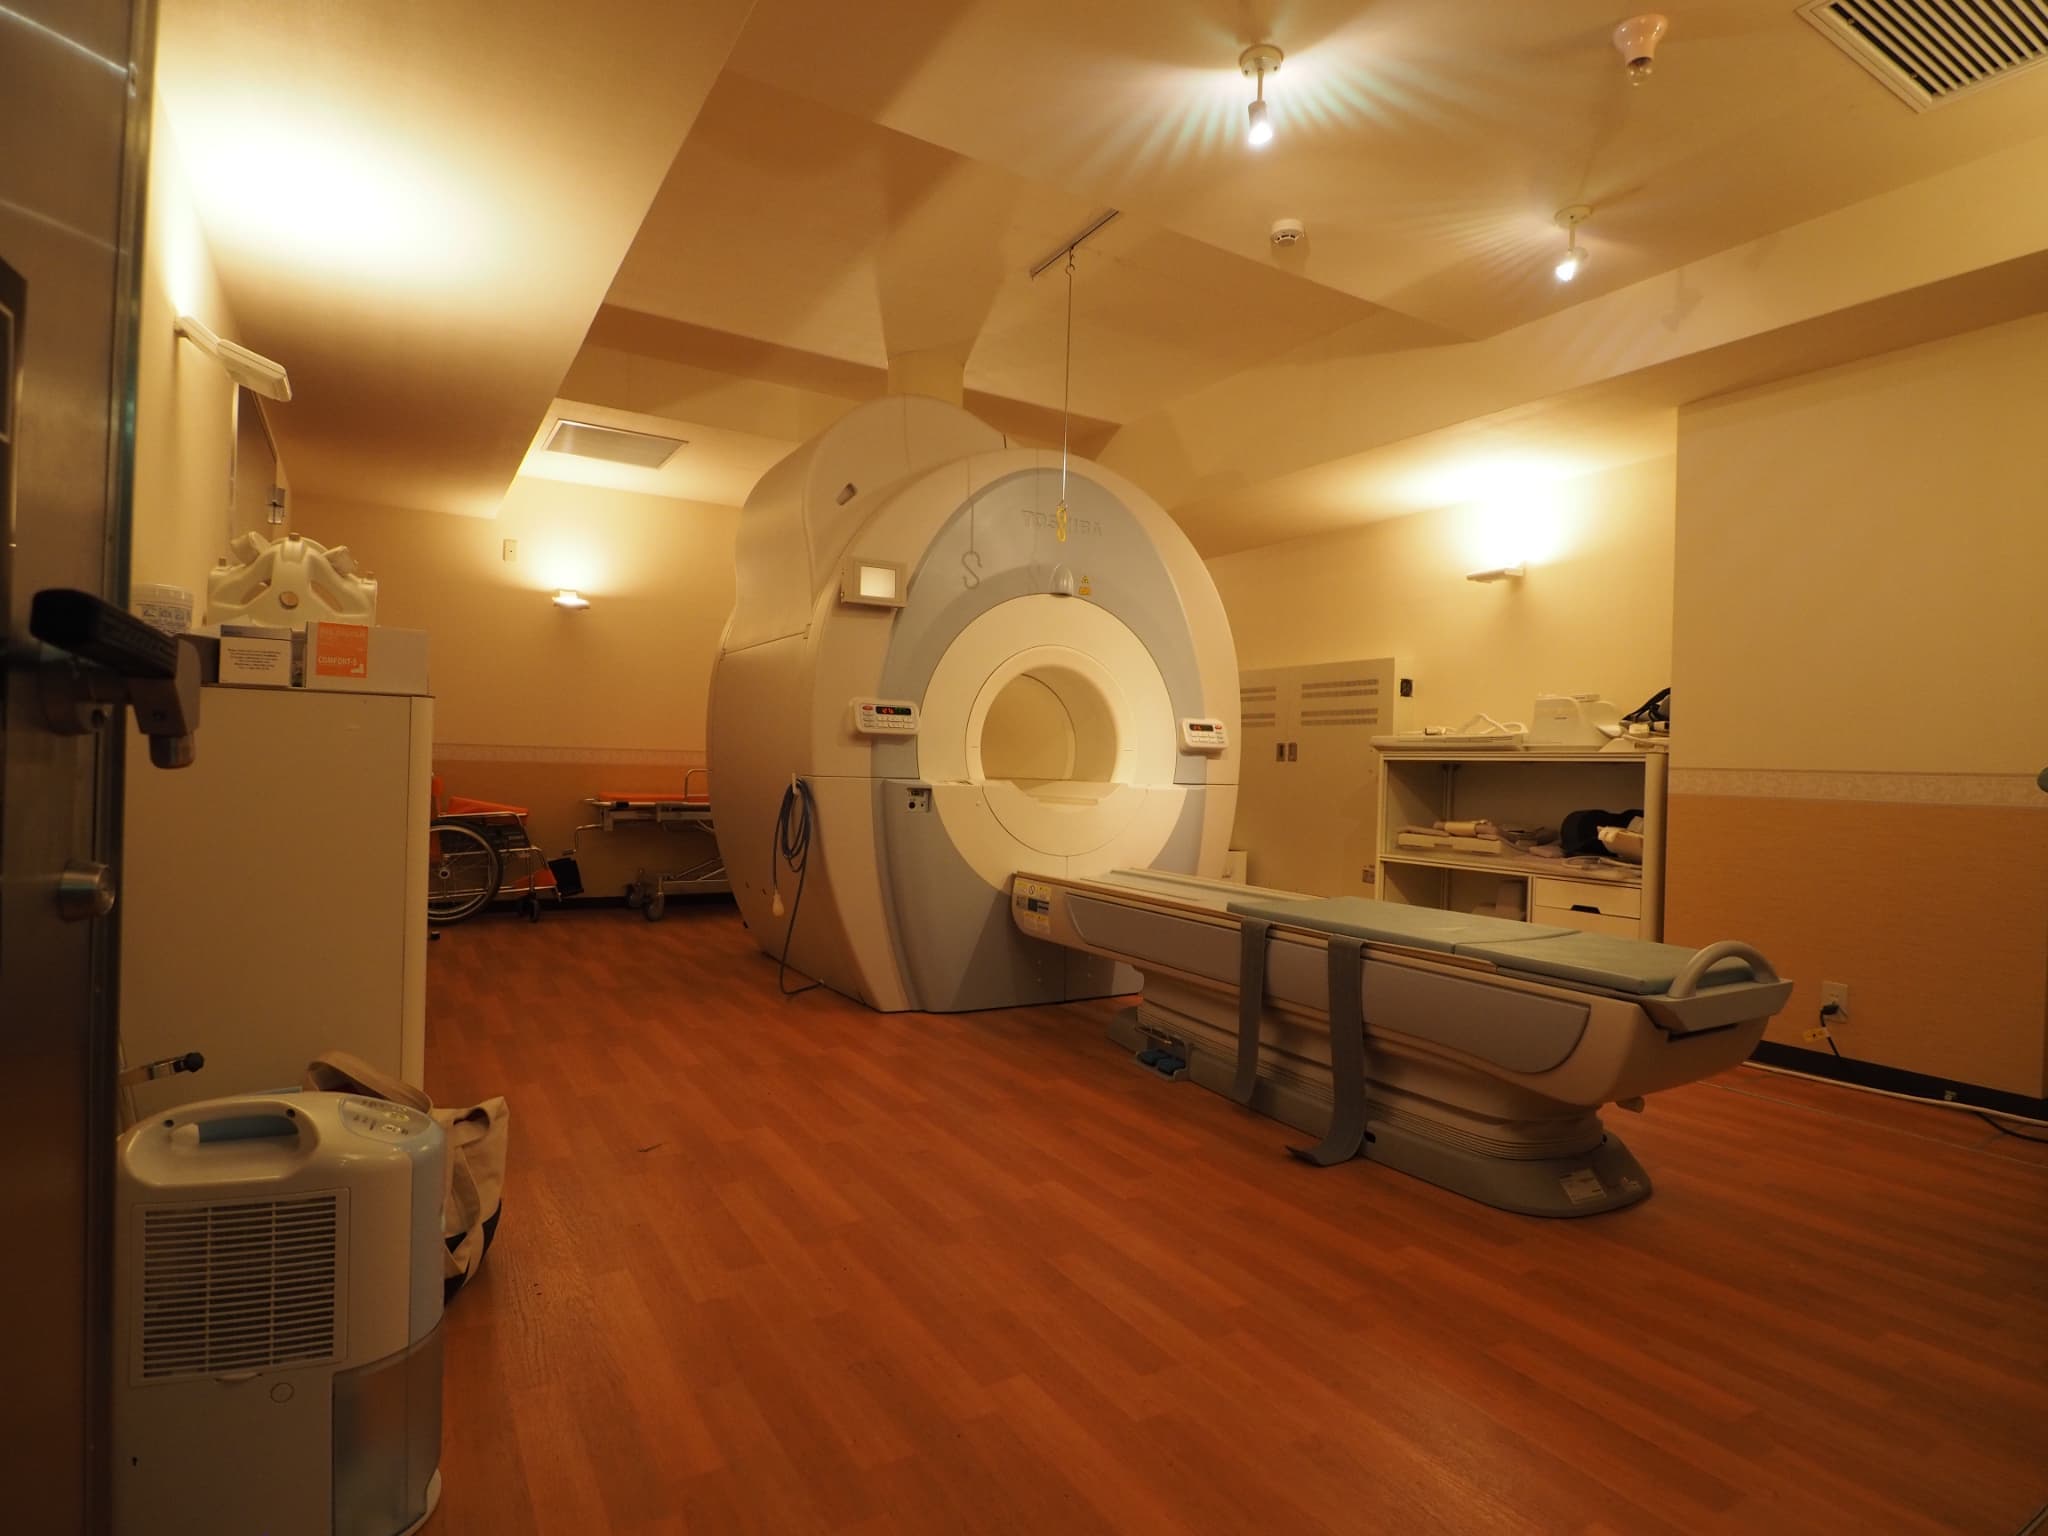 MRI検査